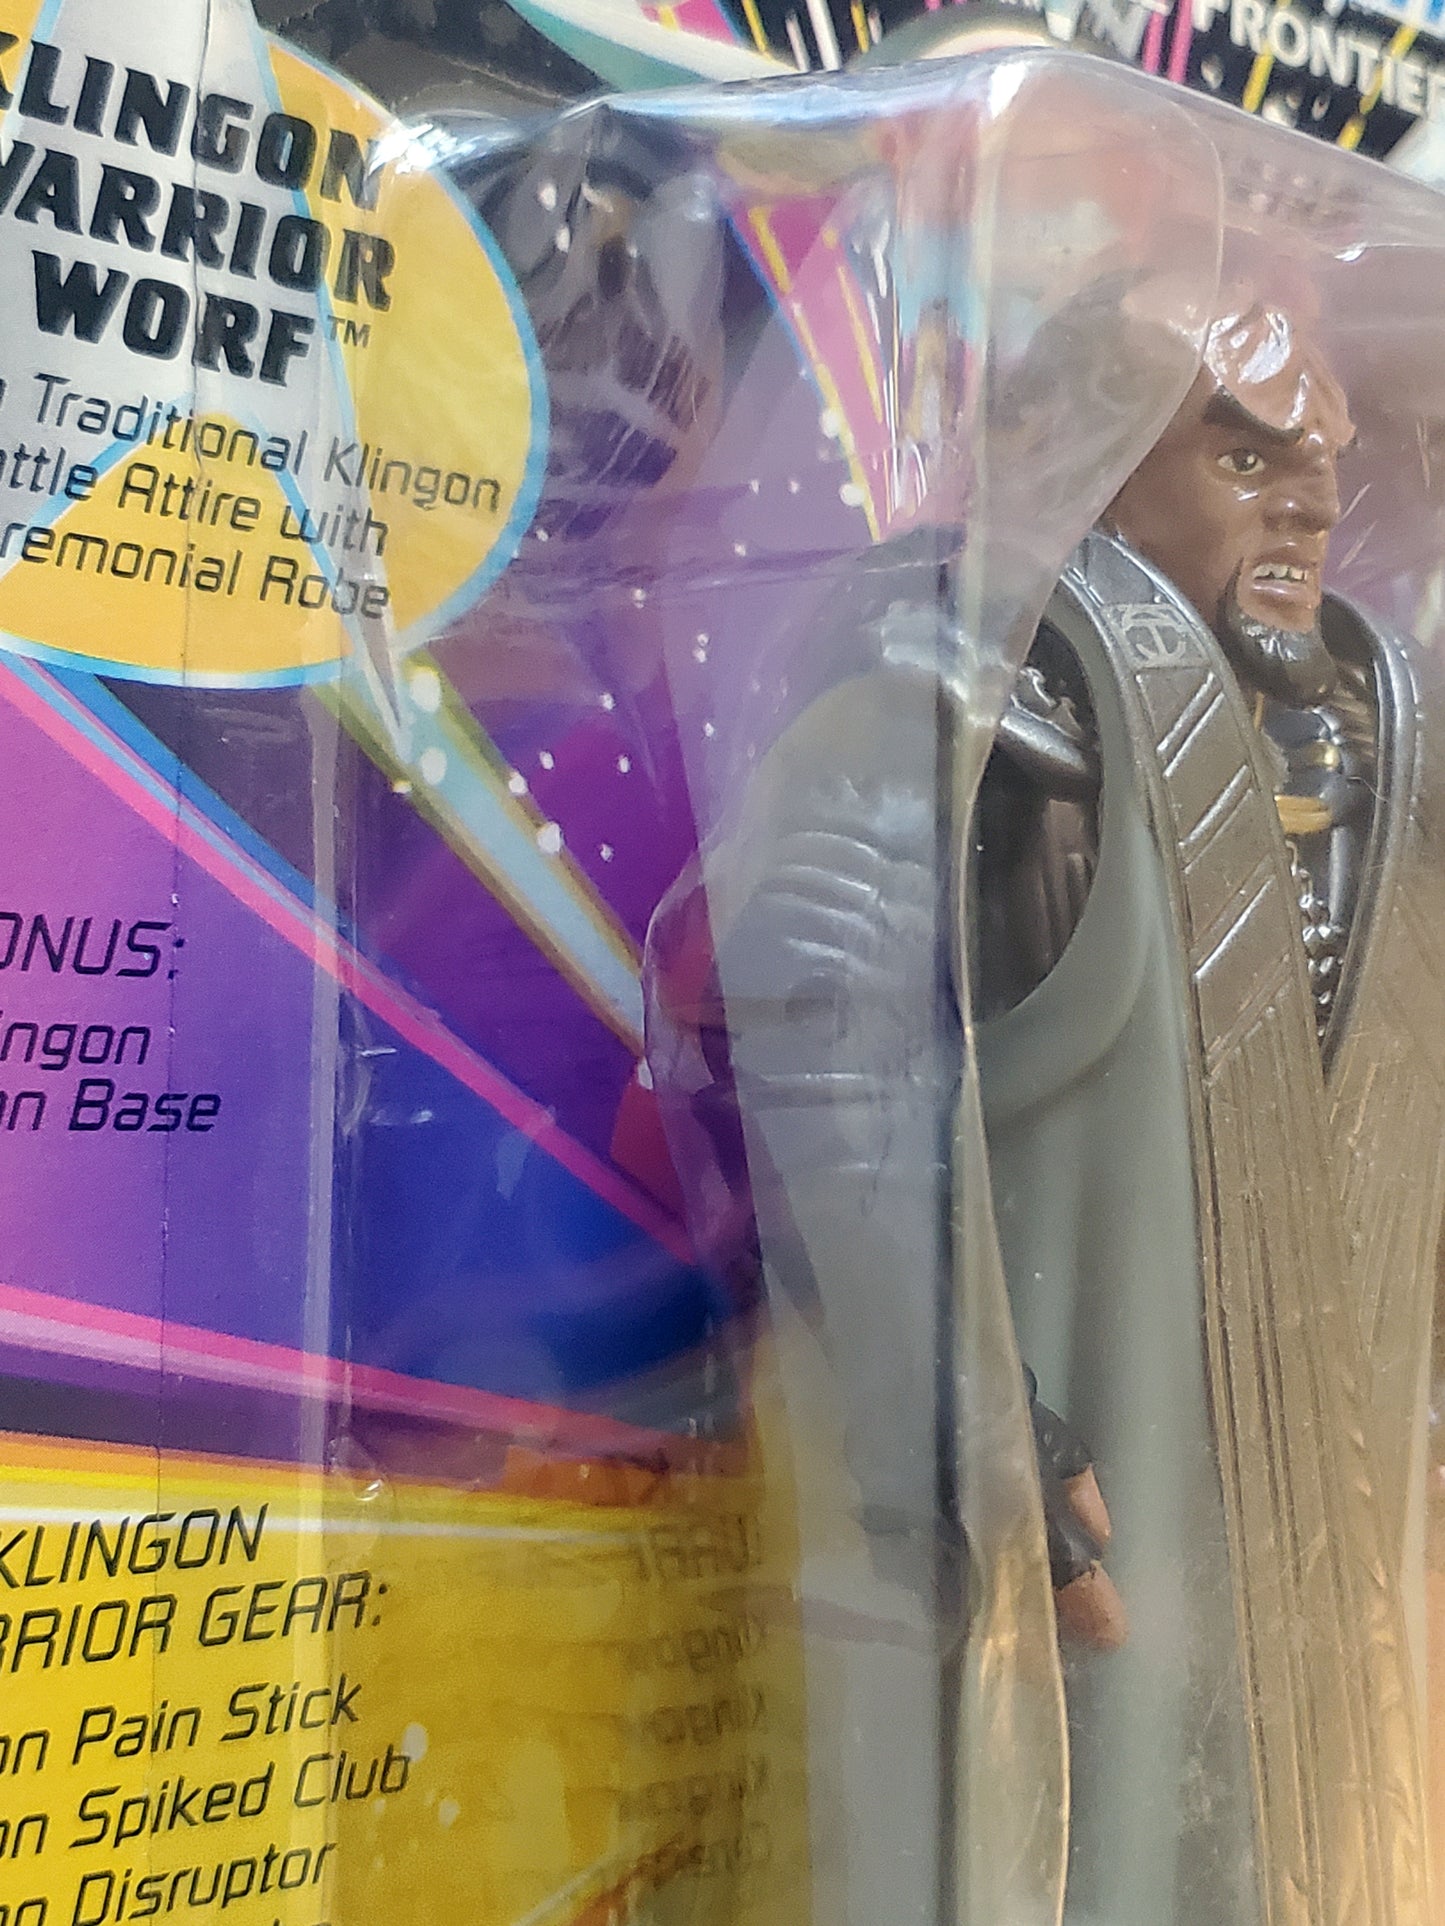 Klingon Warrior Worf from Star Trek: The Next Generation